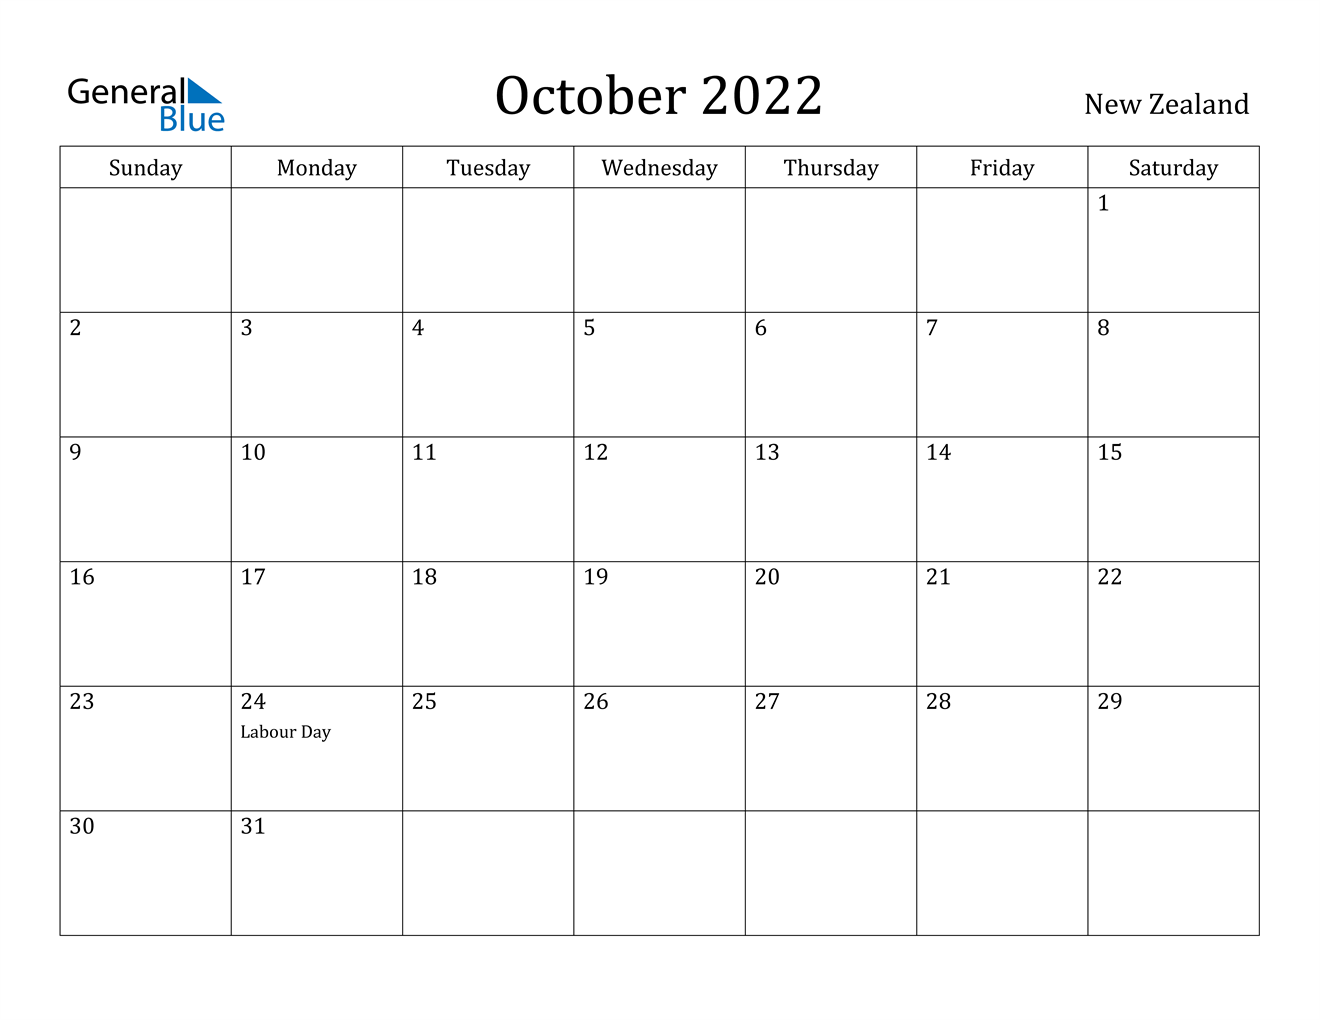 October 2022 Calendar - New Zealand